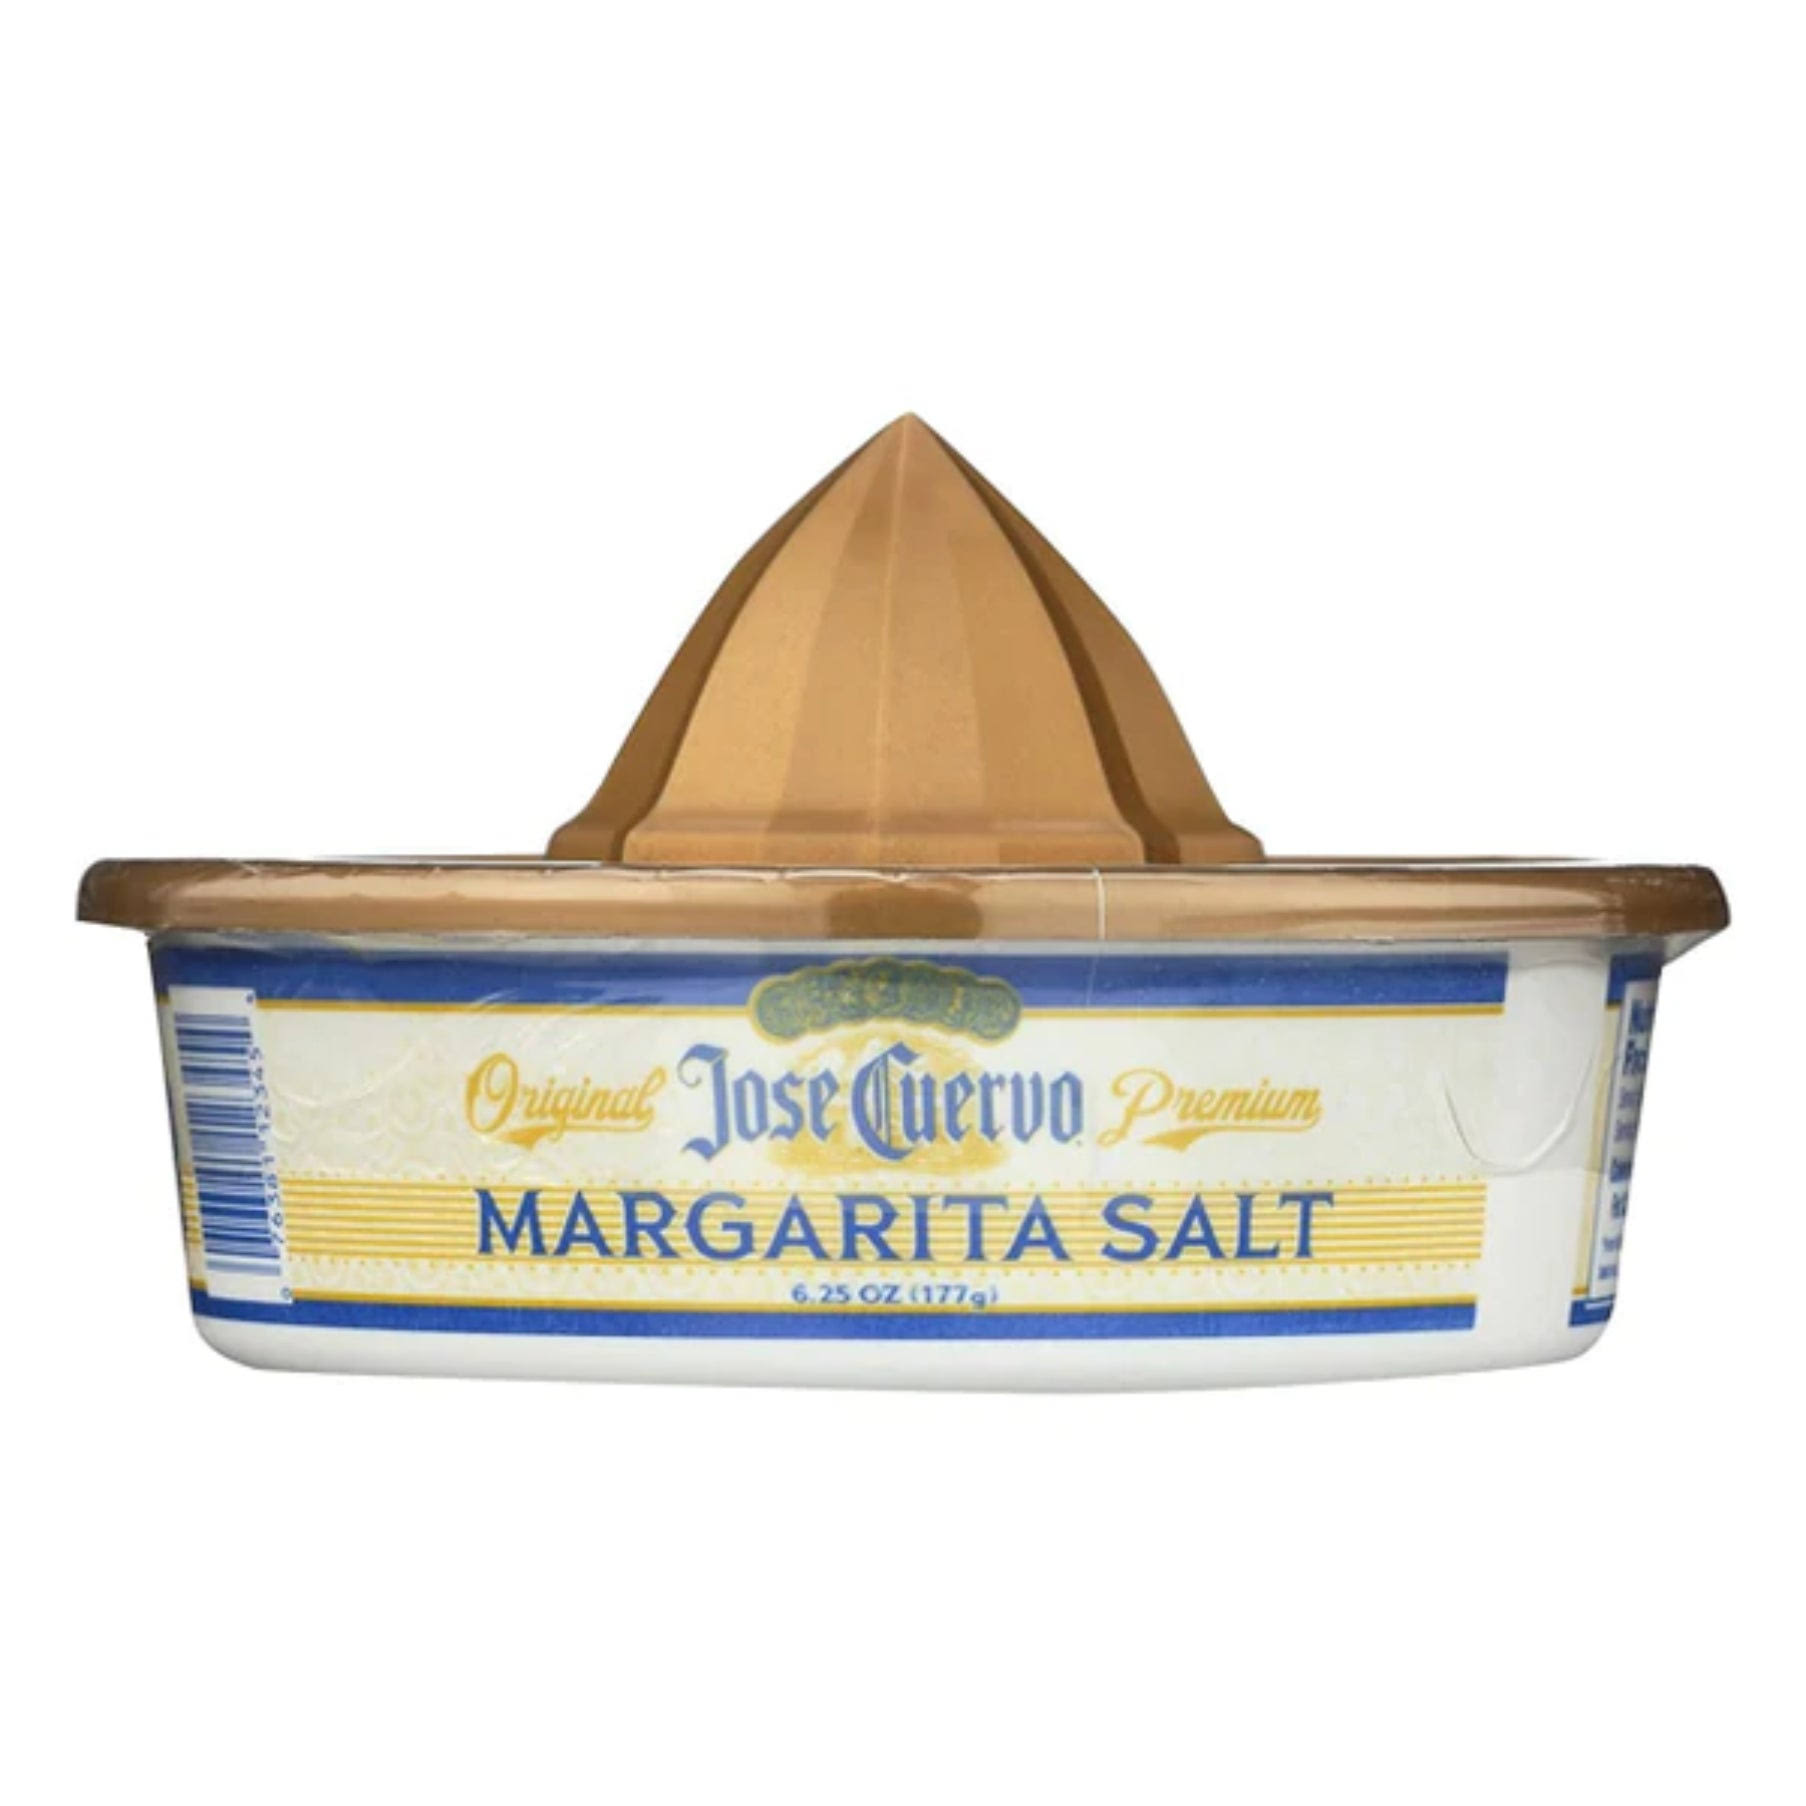 Jose Cuervo Margarita Salt with Juicer